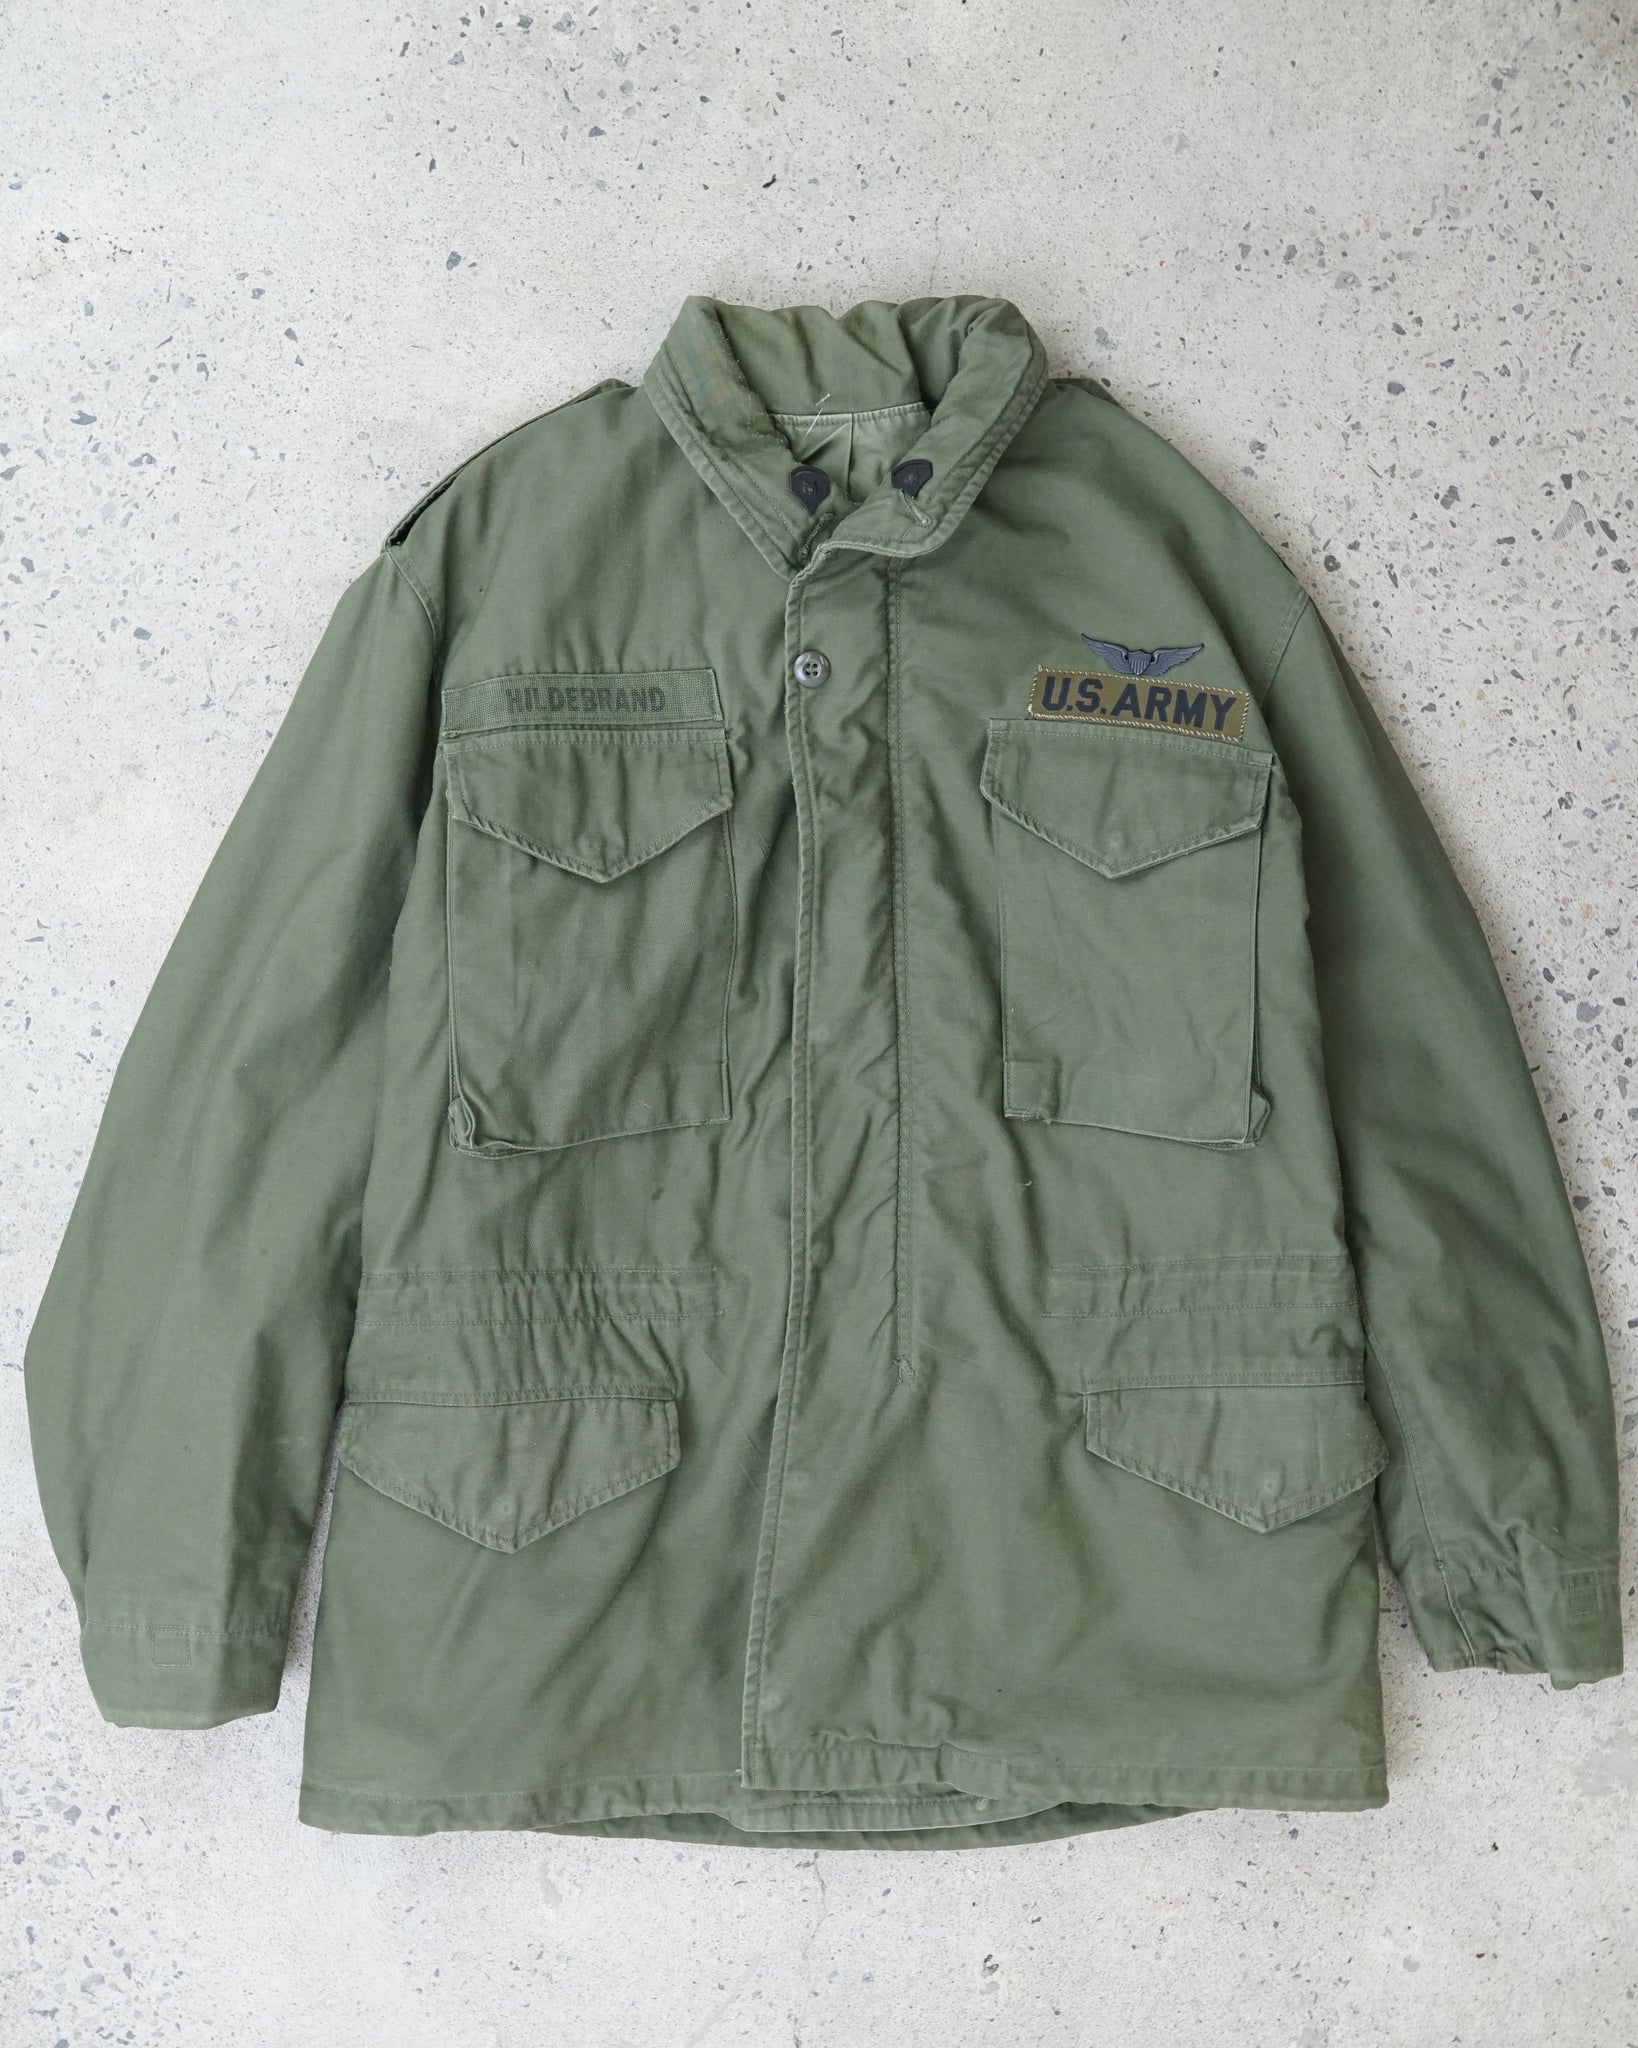 hildebrand us army jacket - medium